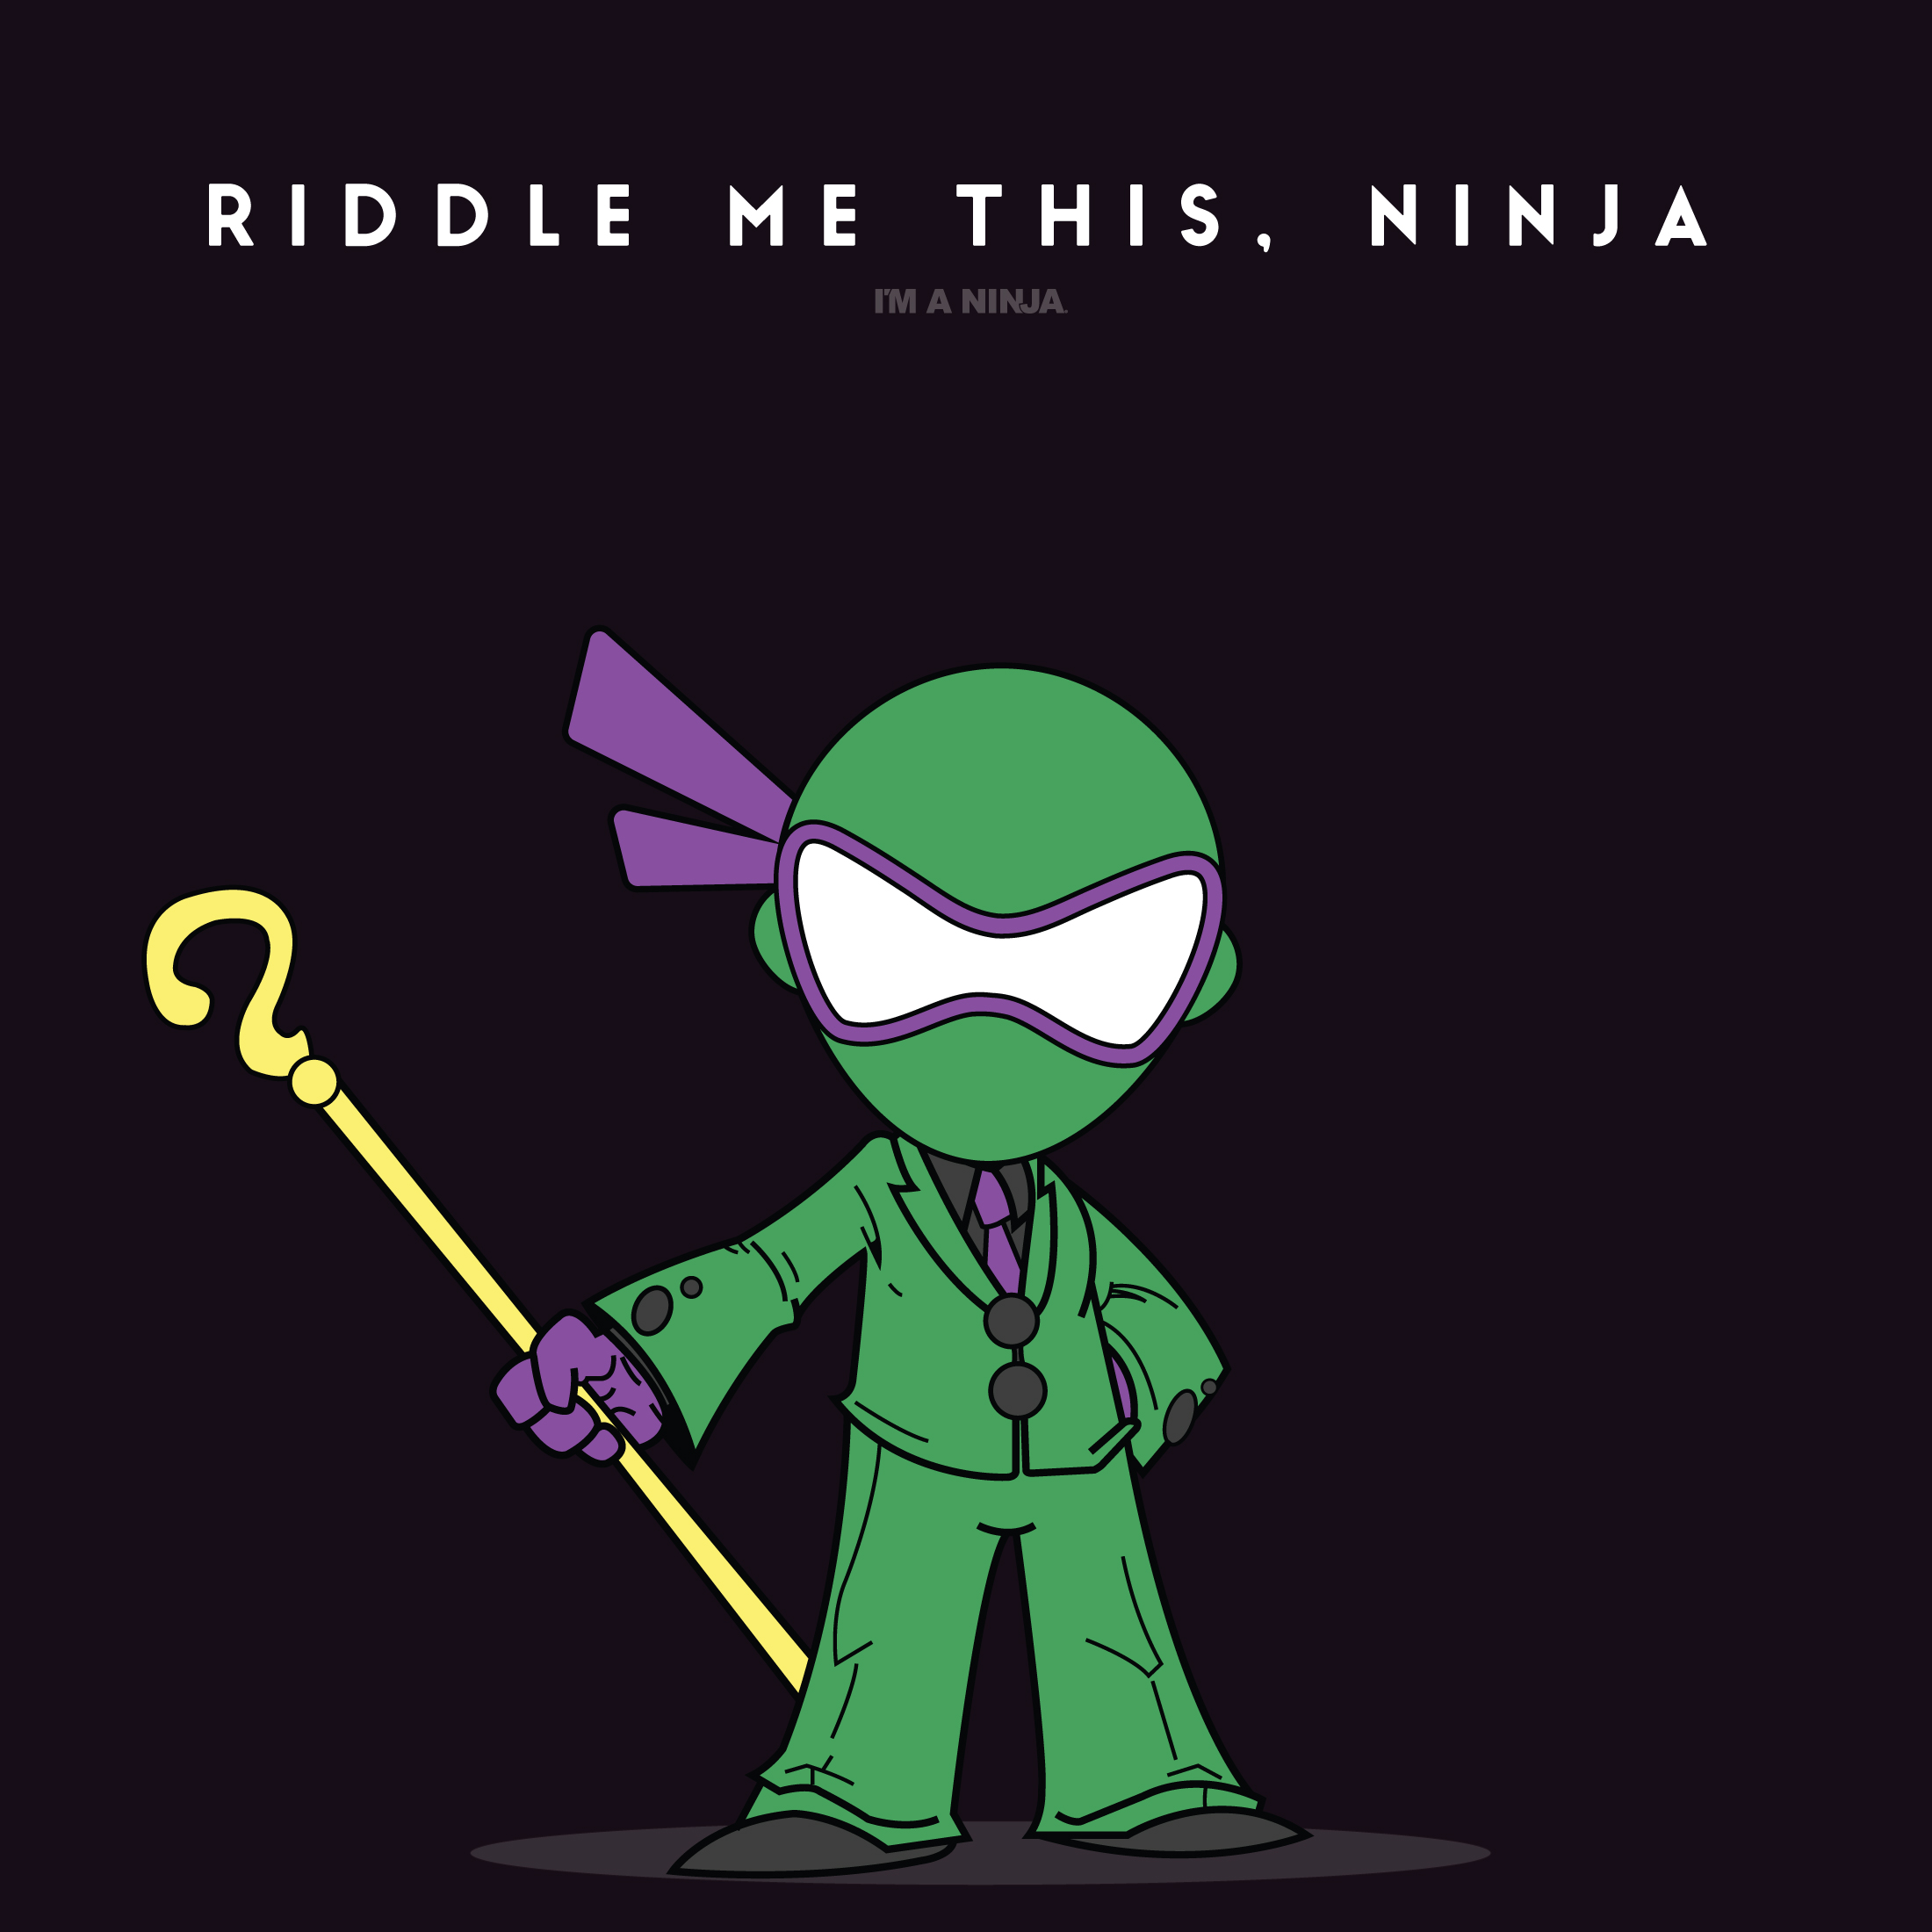 The Riddler x I'M A NINJA